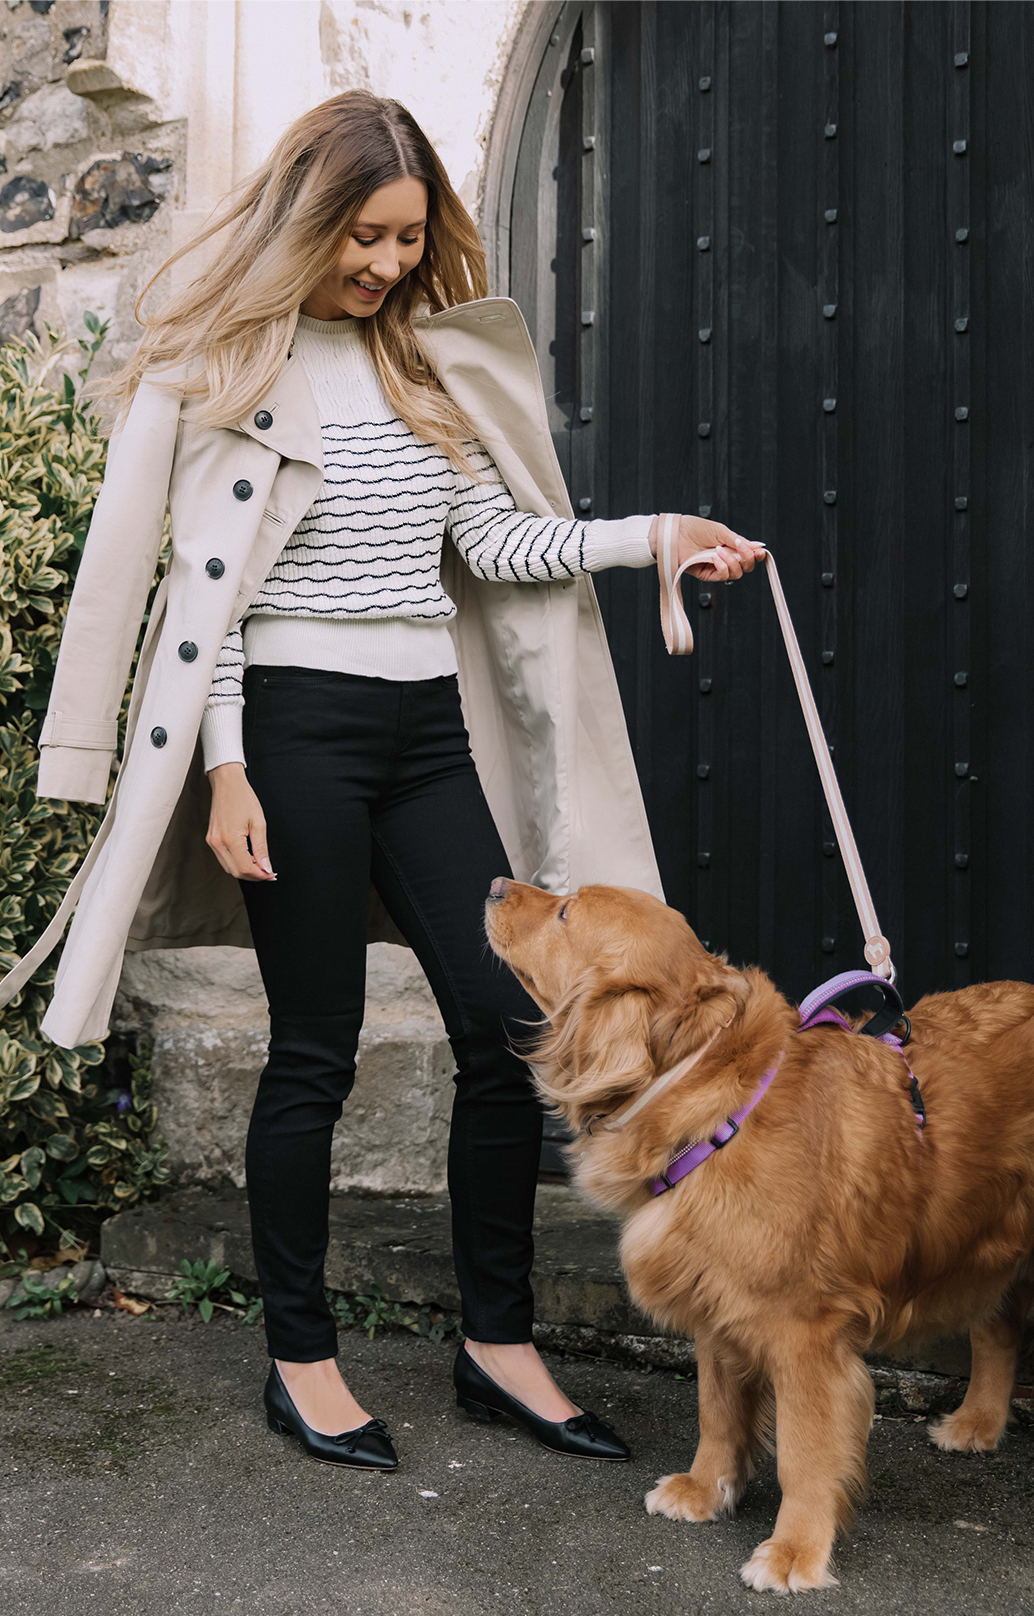 Fashion blogger @shegoeswear photographed on a walk wearing Hobbs Saskia neutral trench, Daniella jumper and Gia black jeans.